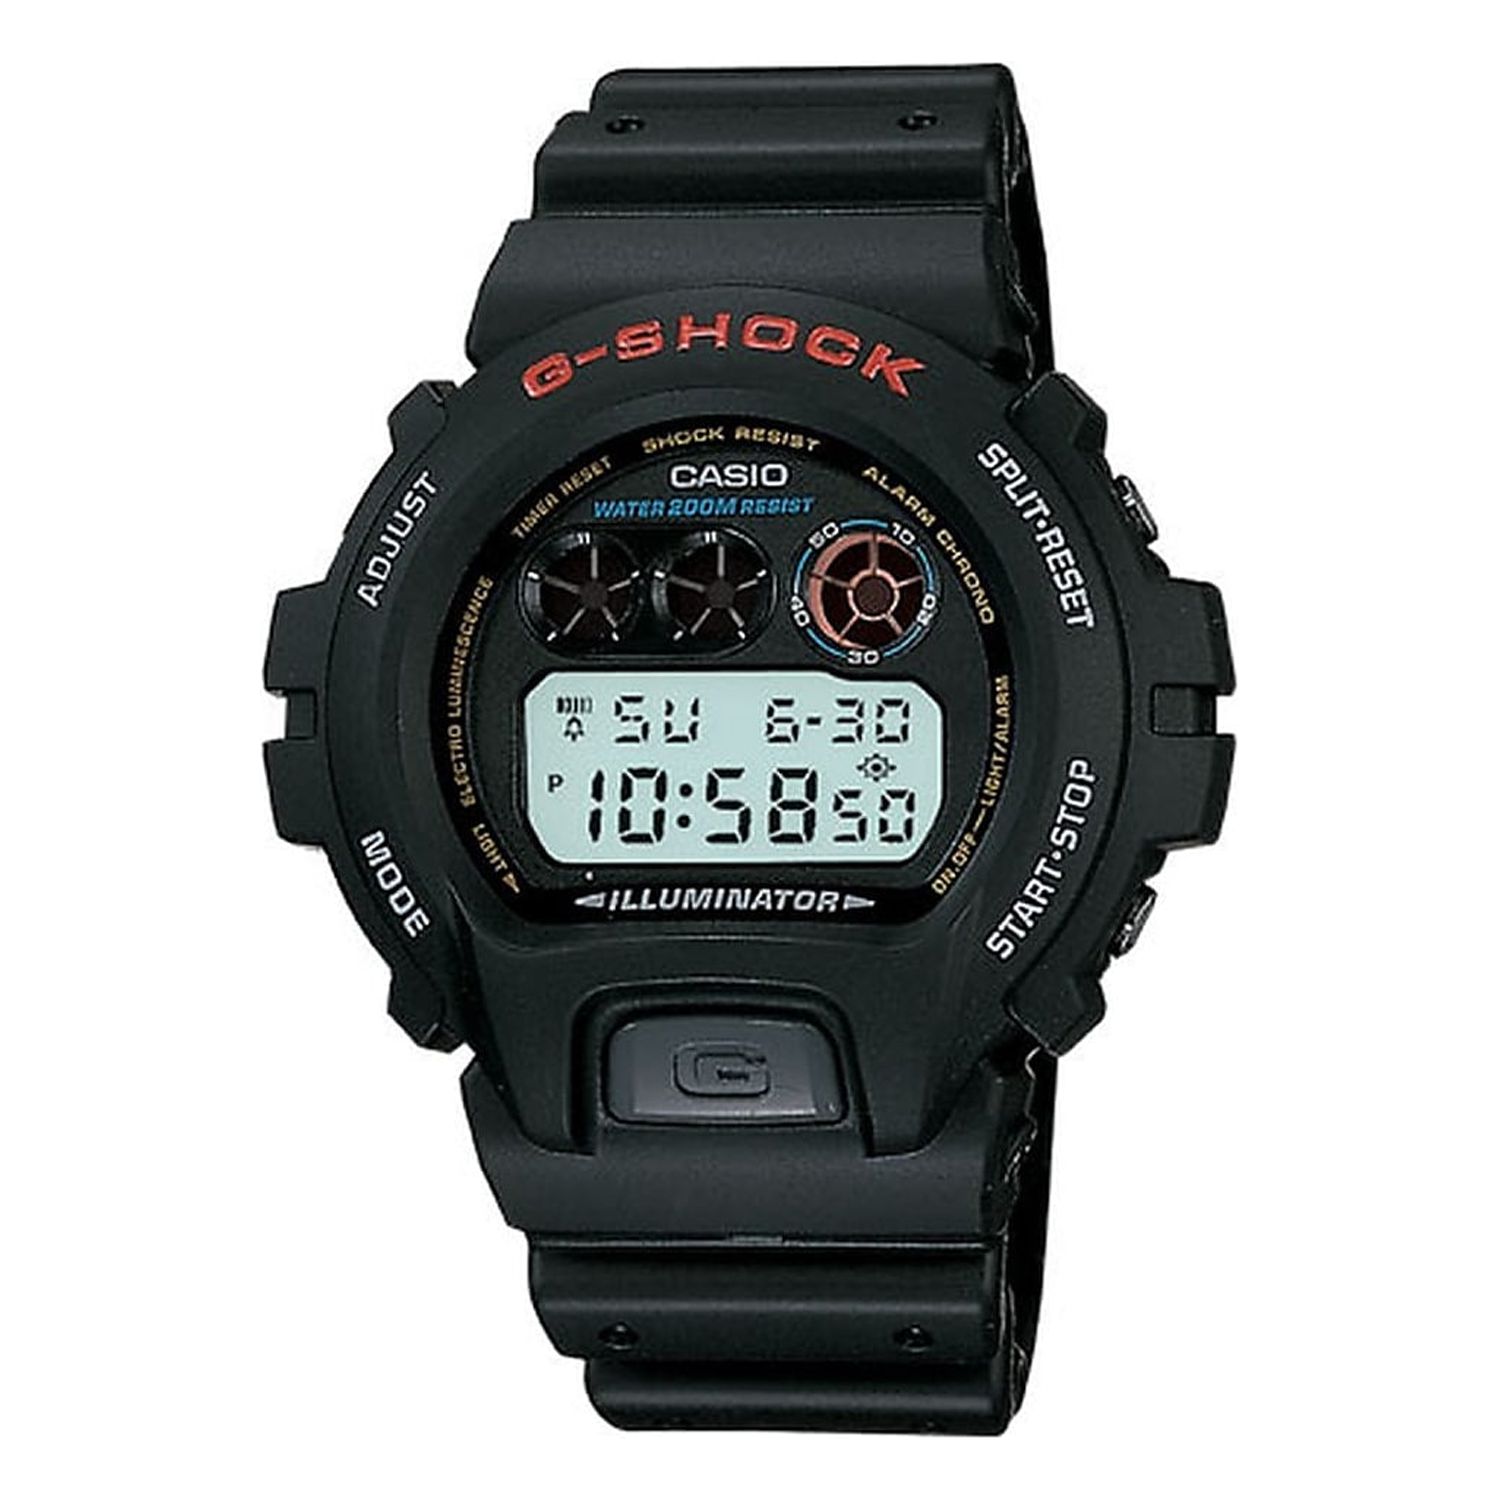 Casio Men's G-Shock Black Classic Digital Watch DW6900-1V - image 1 of 5